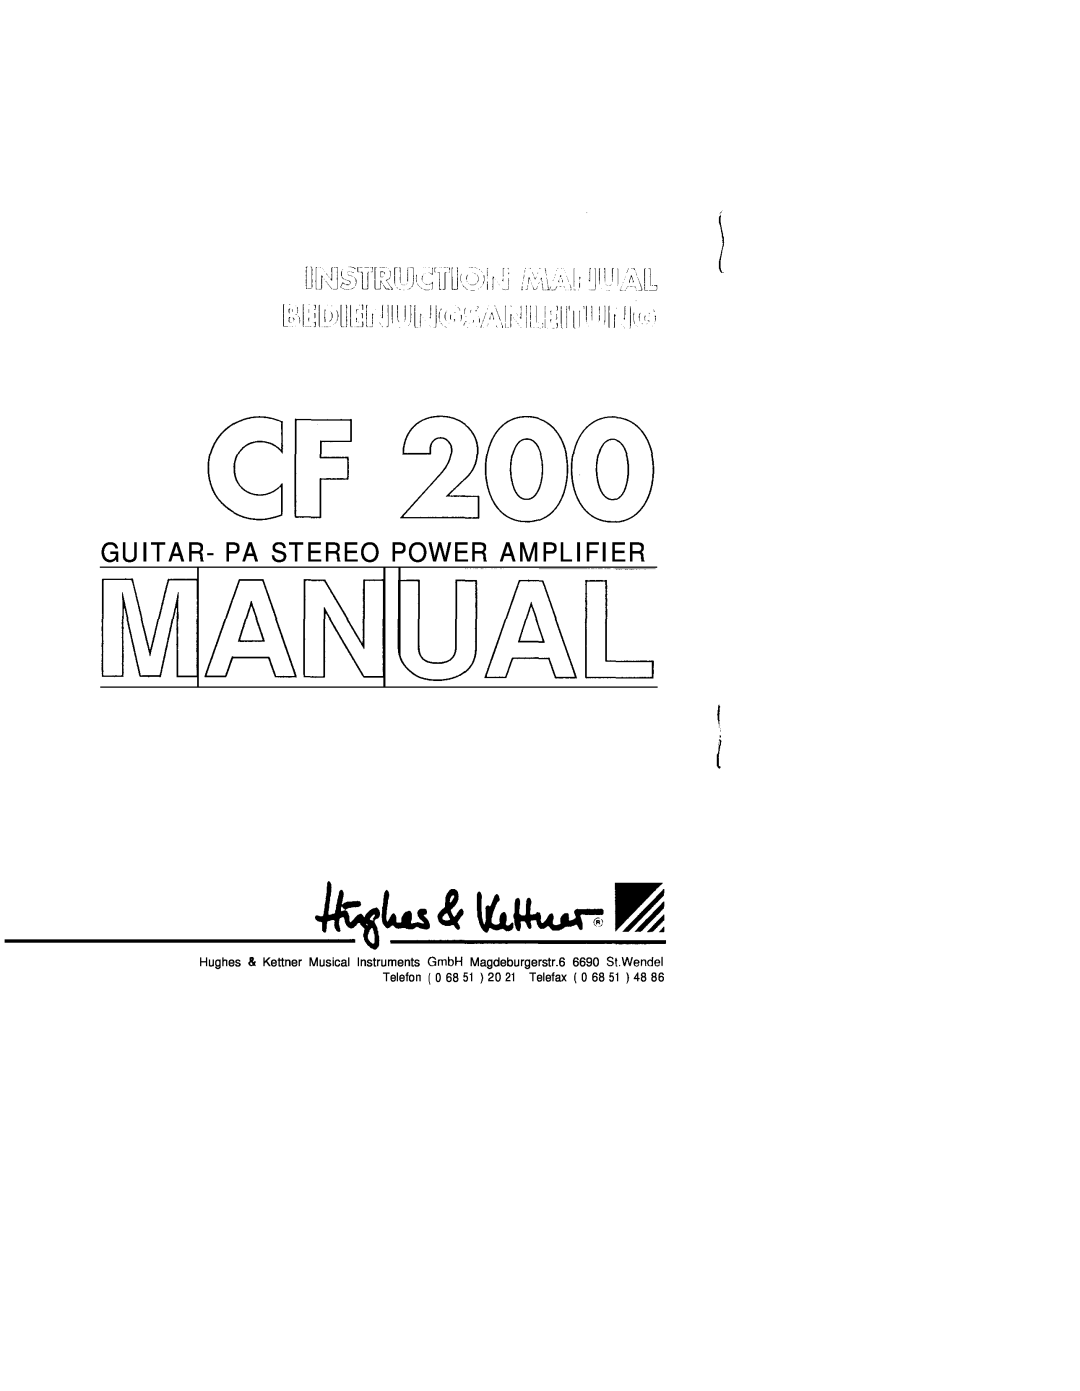 Hughes & Kettner CF 200 manual Guitar- Pa Stereo Power Amplifier 